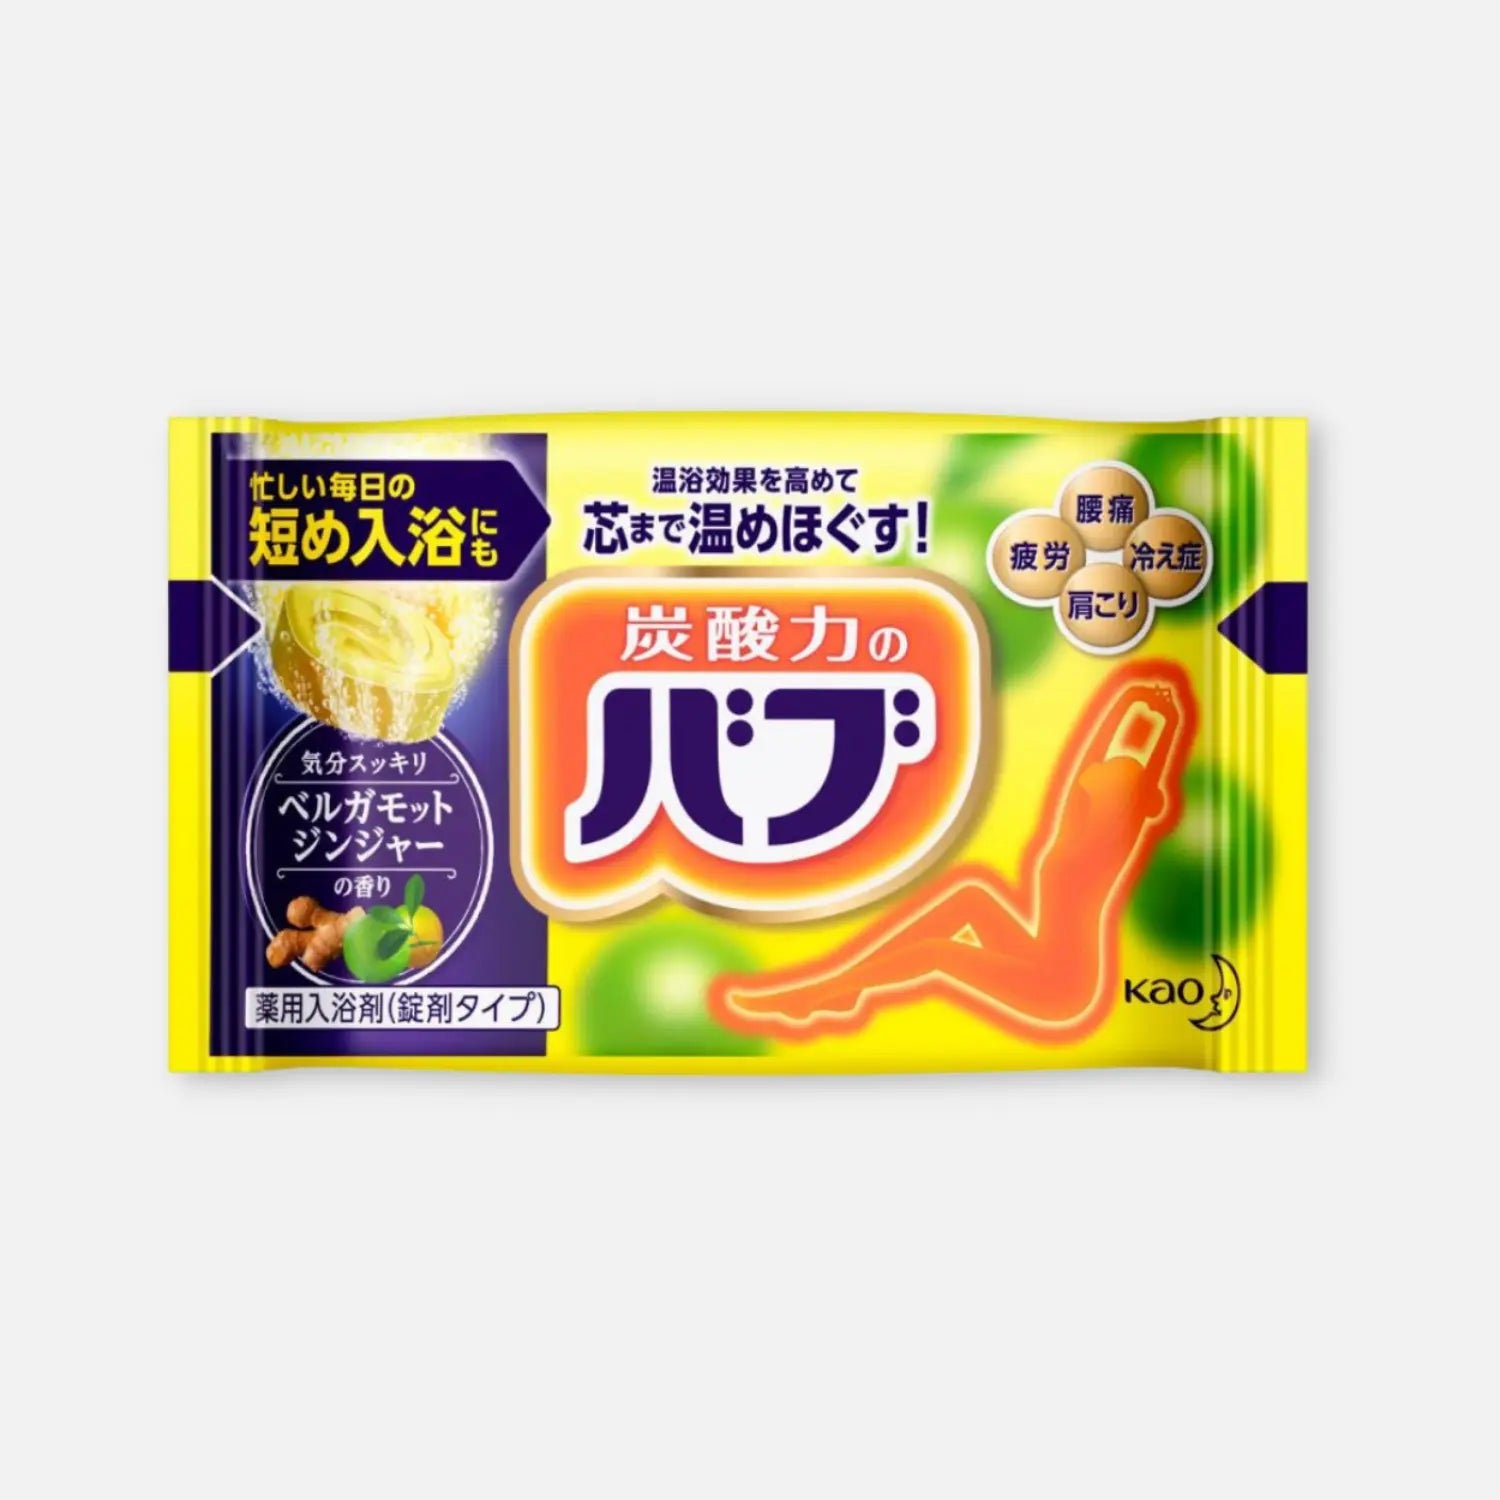 Kao Bub Aroma Bath Salt Bombs 40g (Various Scents) - Buy Me Japan